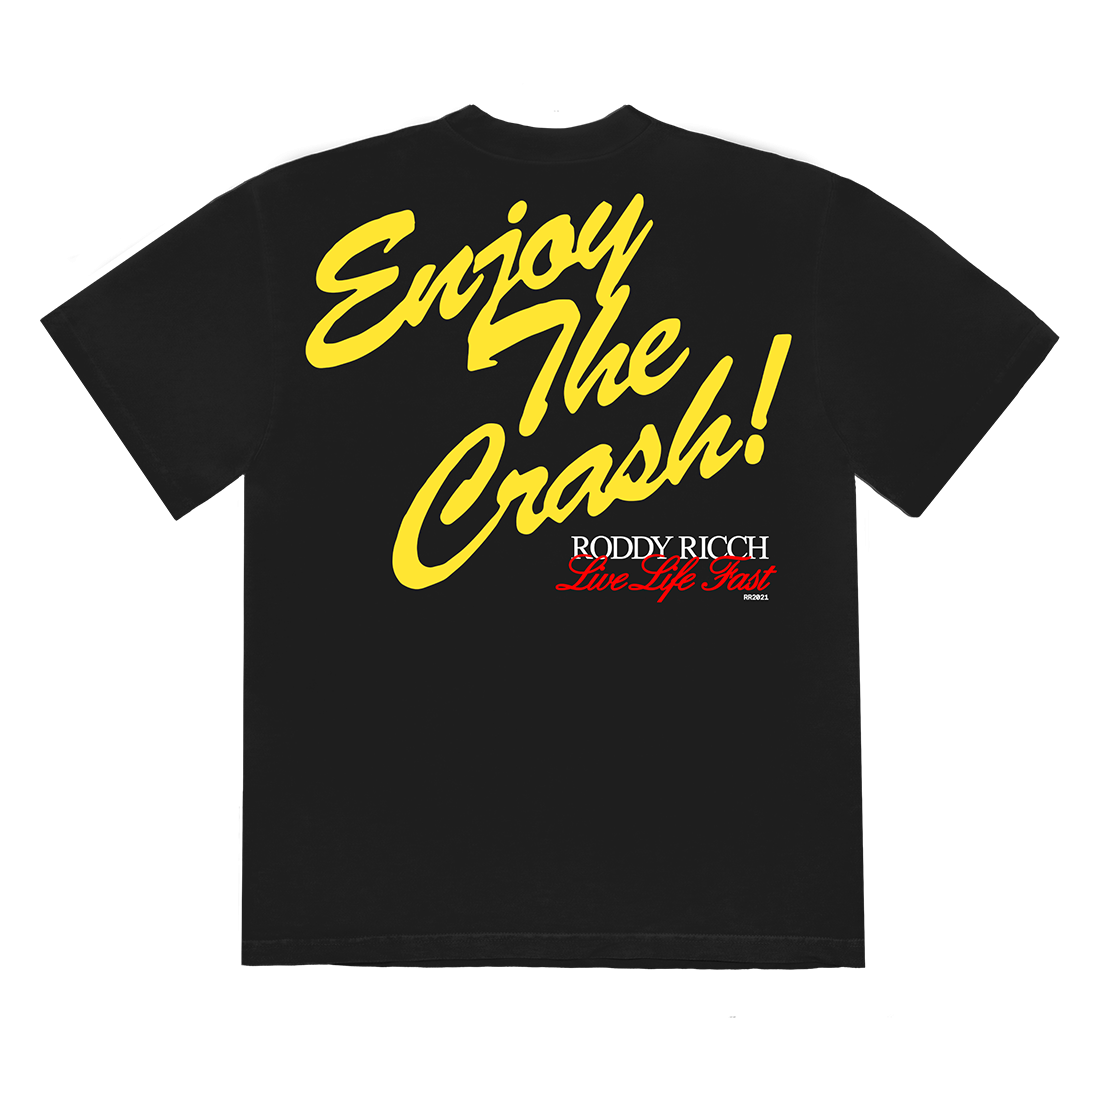 Enjoy The Crash! T-Shirt I